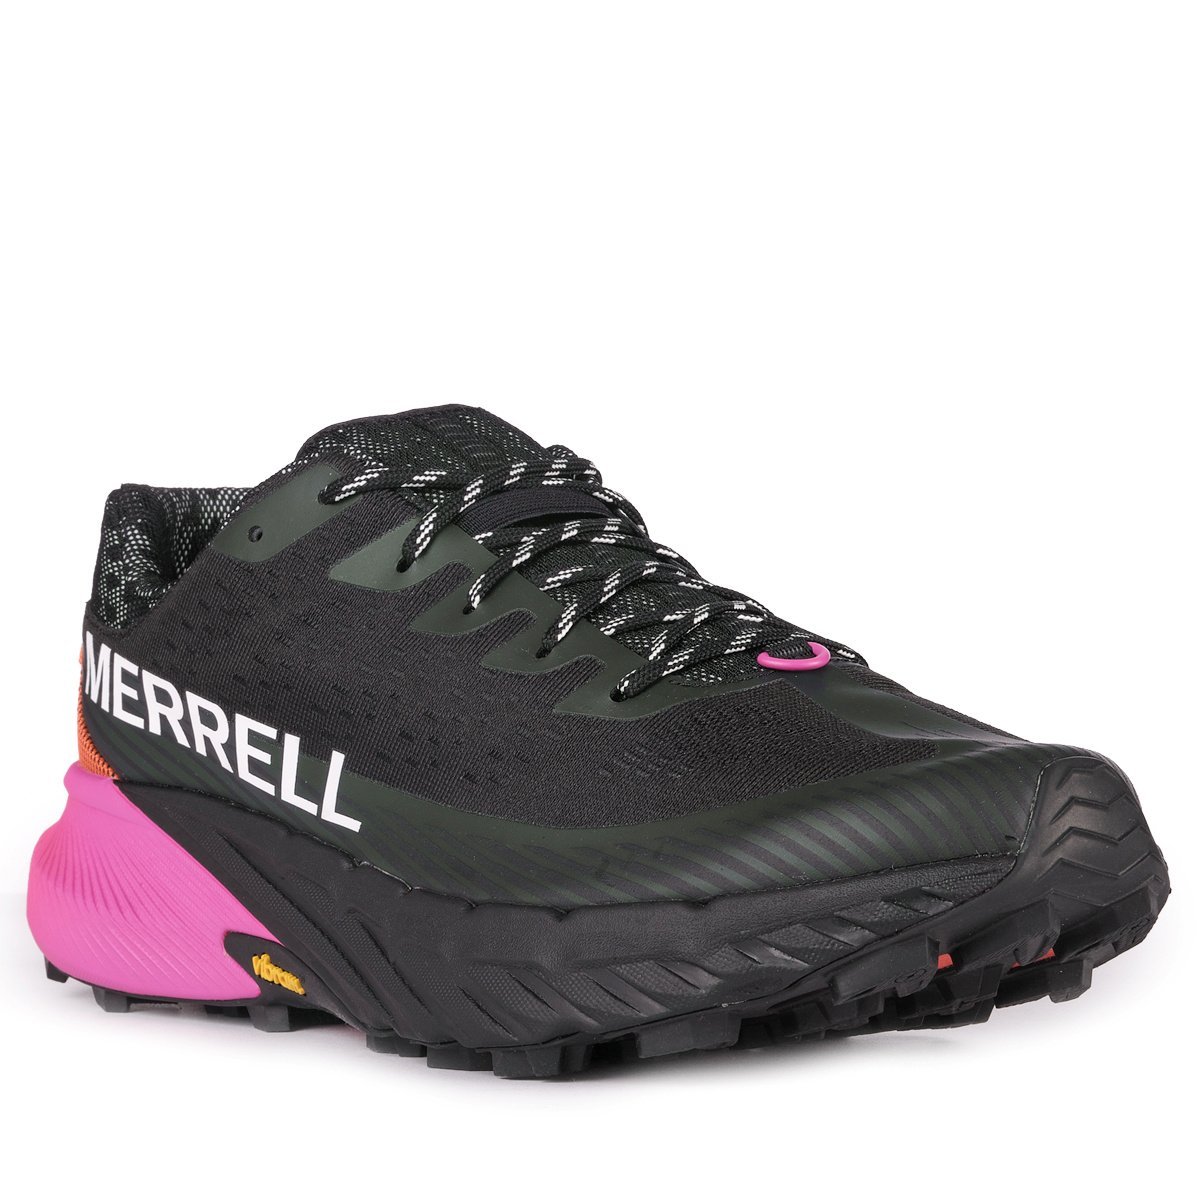 Obuv Merrell Agility Peak 5 W J068236 - čierna/fialová